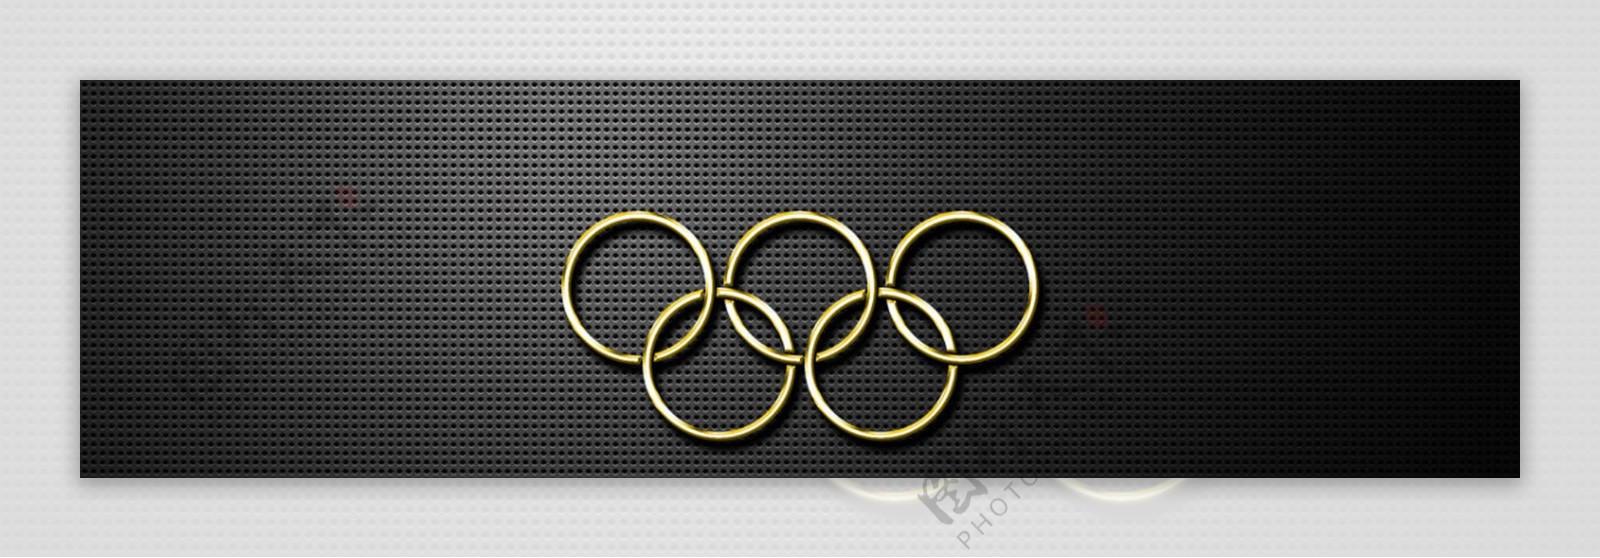 质感奥运五环banner创意设计